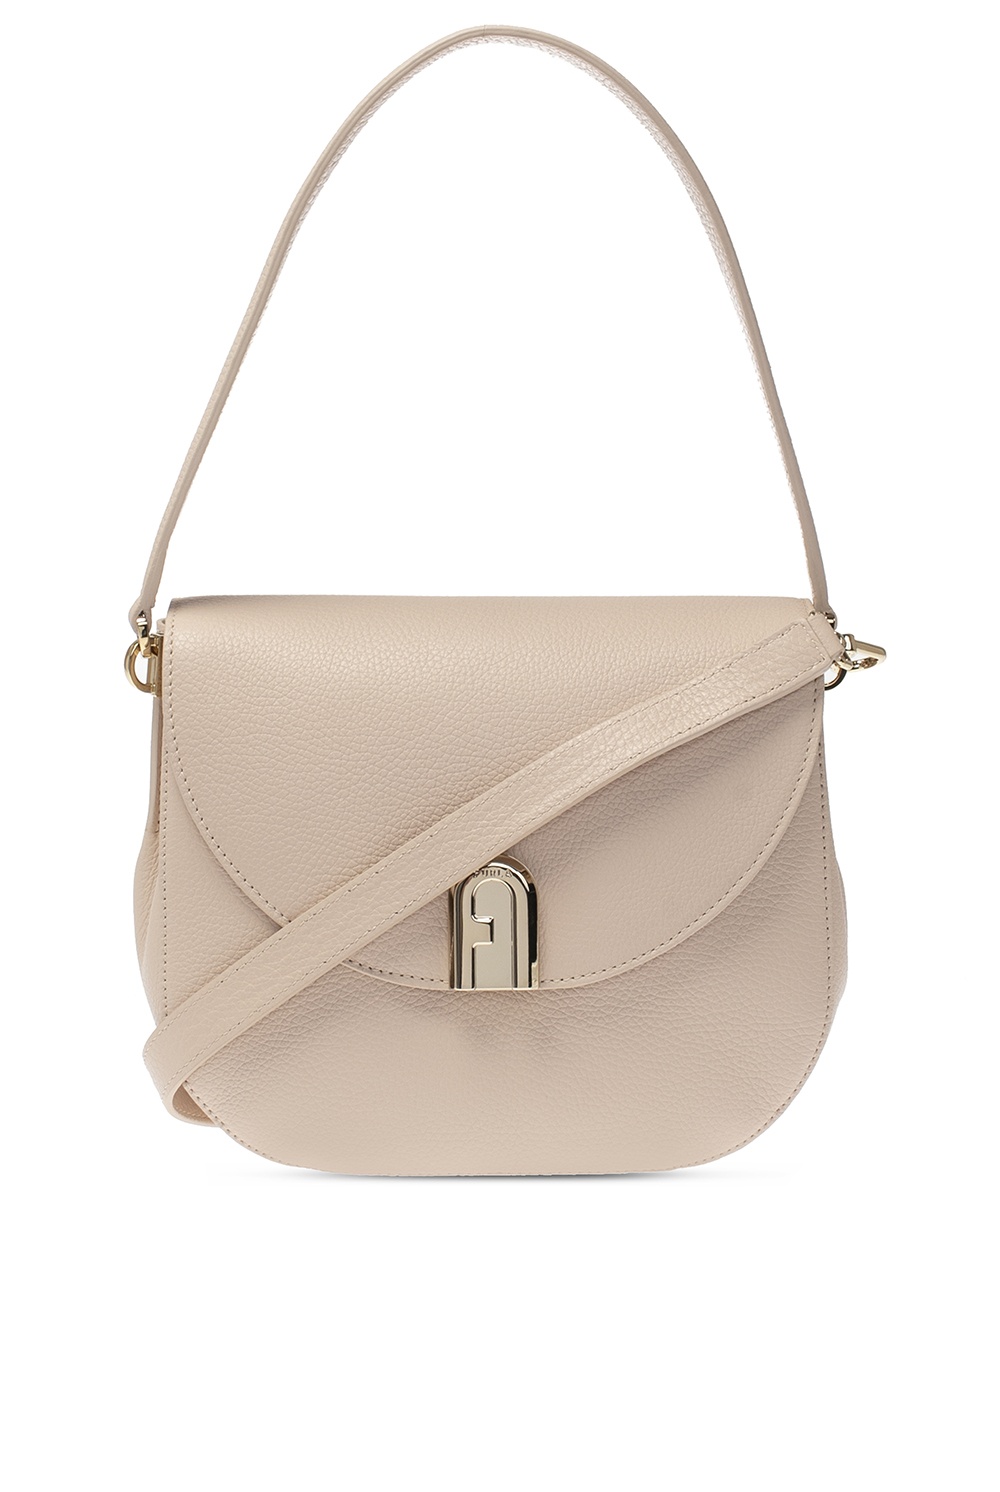 ‘Sleek’ shoulder bag Furla - Vitkac Spain